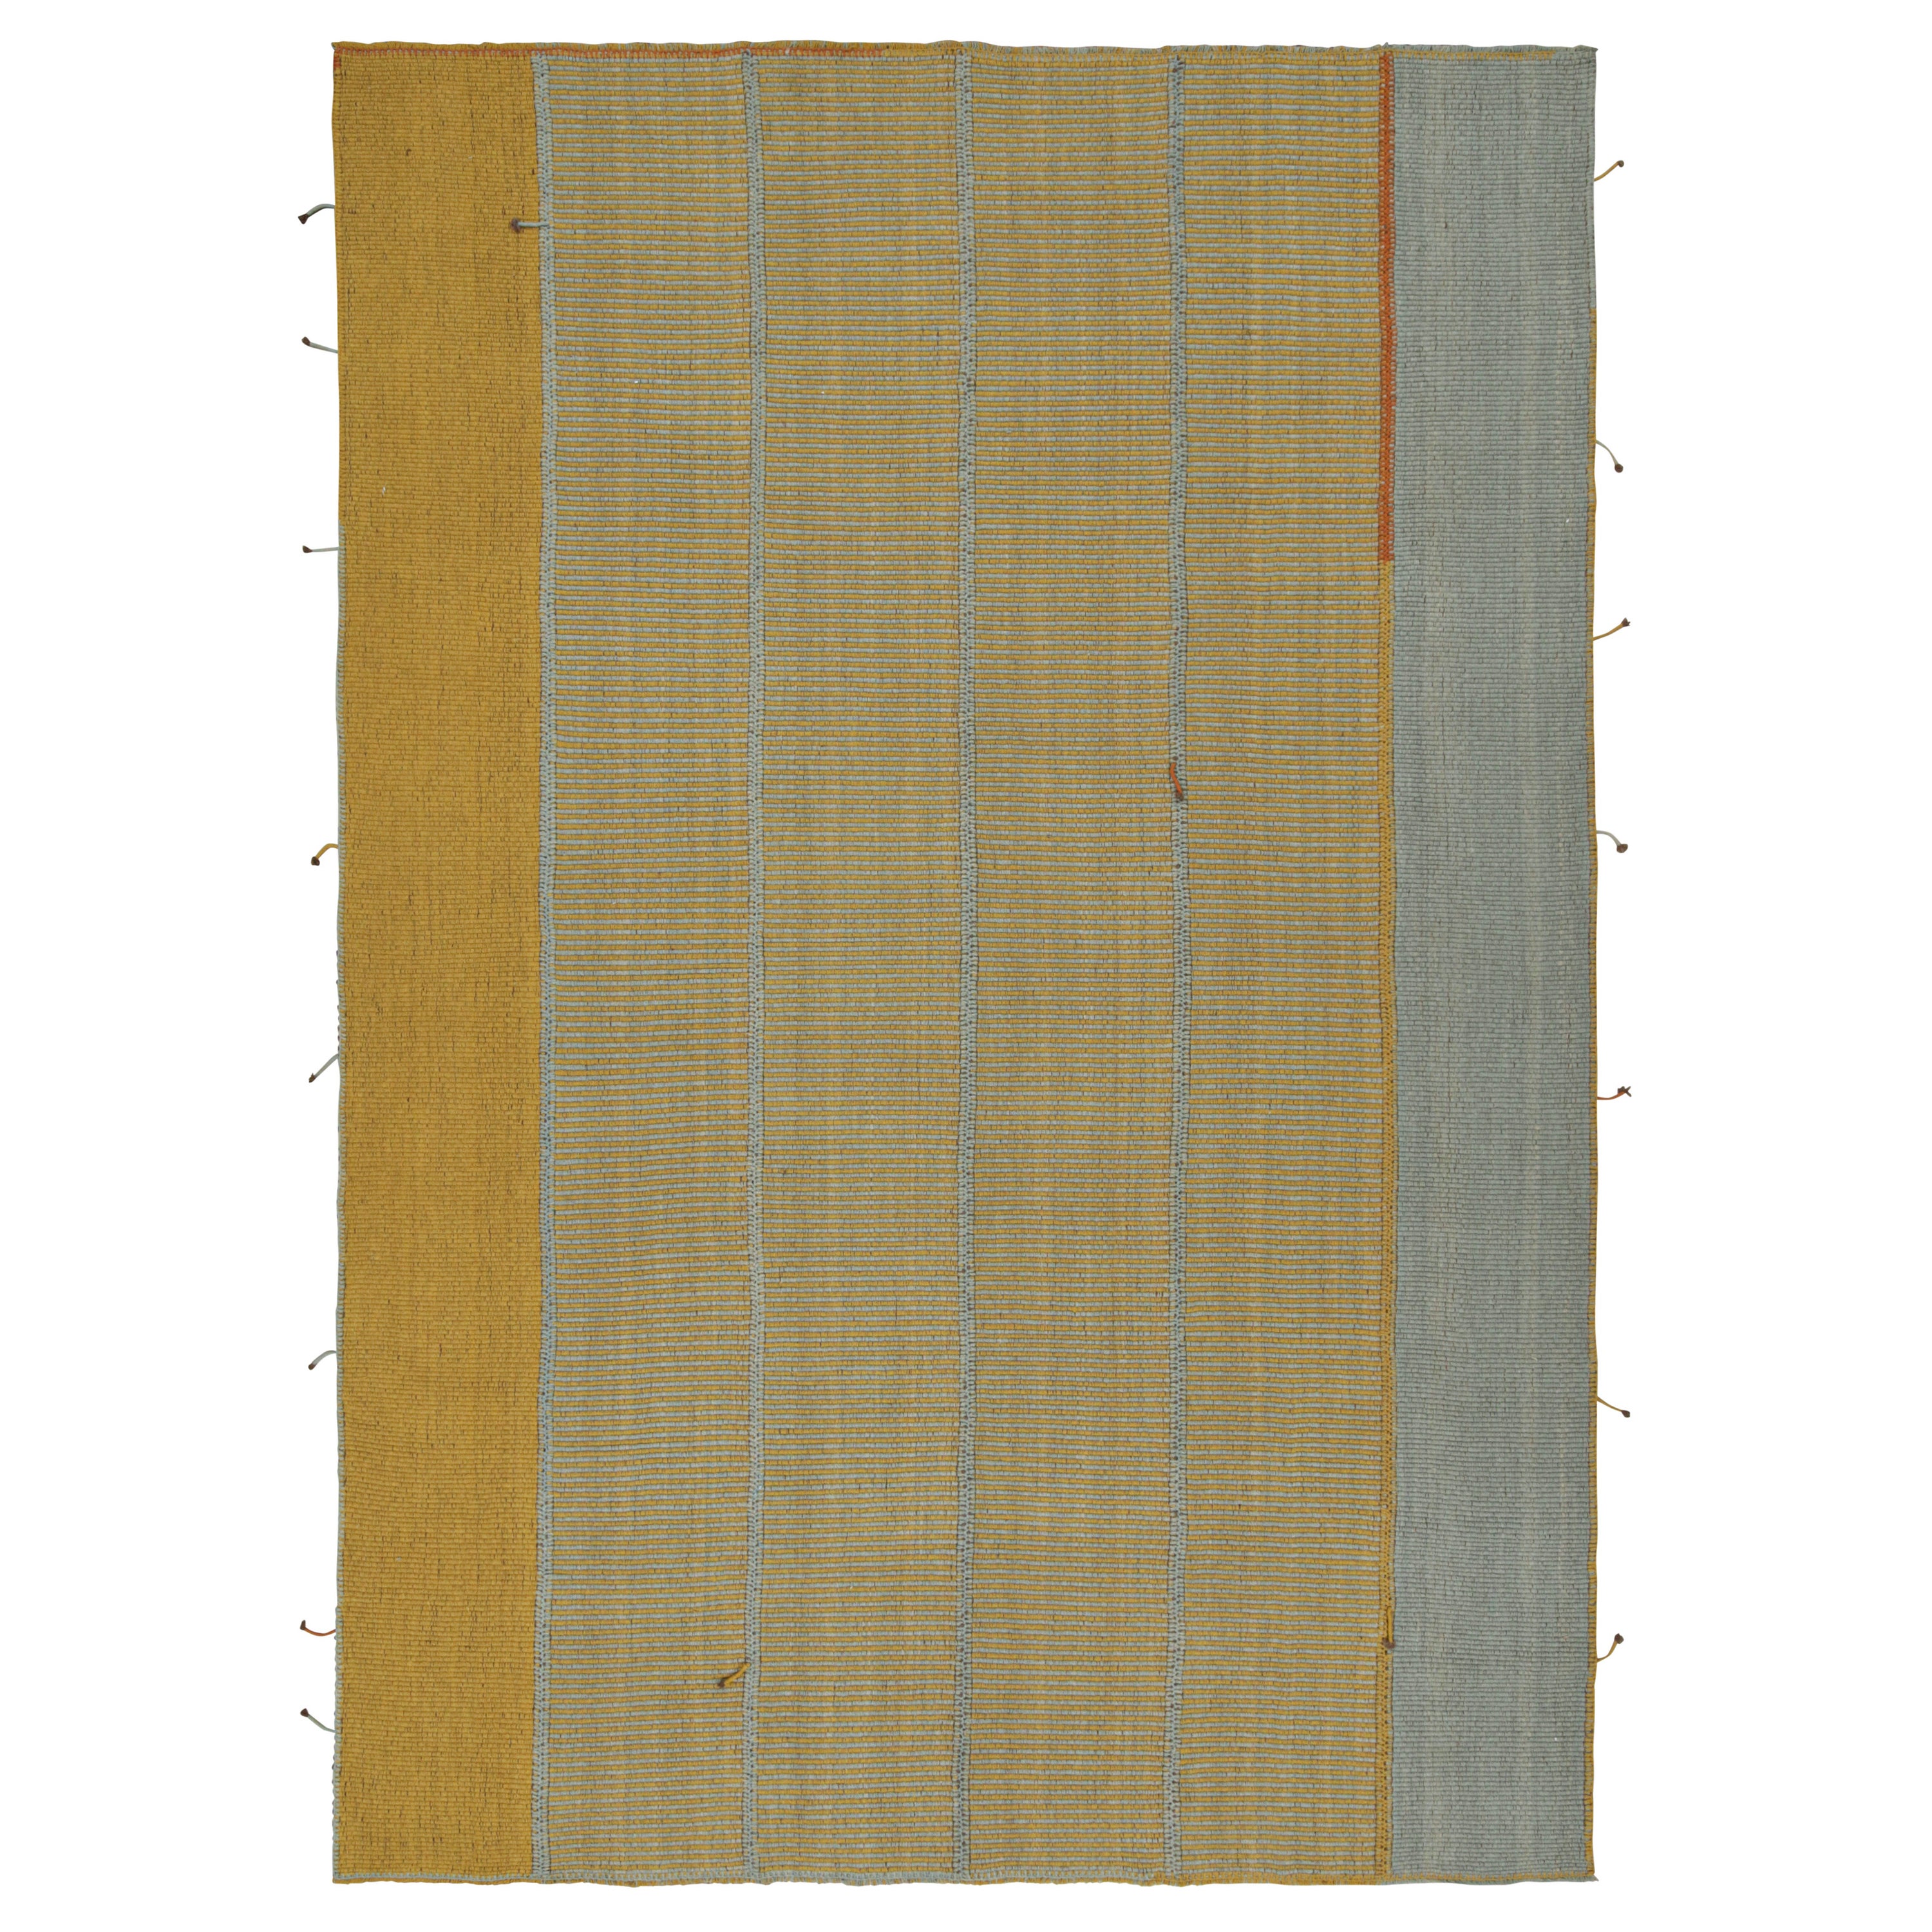 Rug & Kilim’s Contemporary Custom Kilim Design in Gold and Blue Stripes